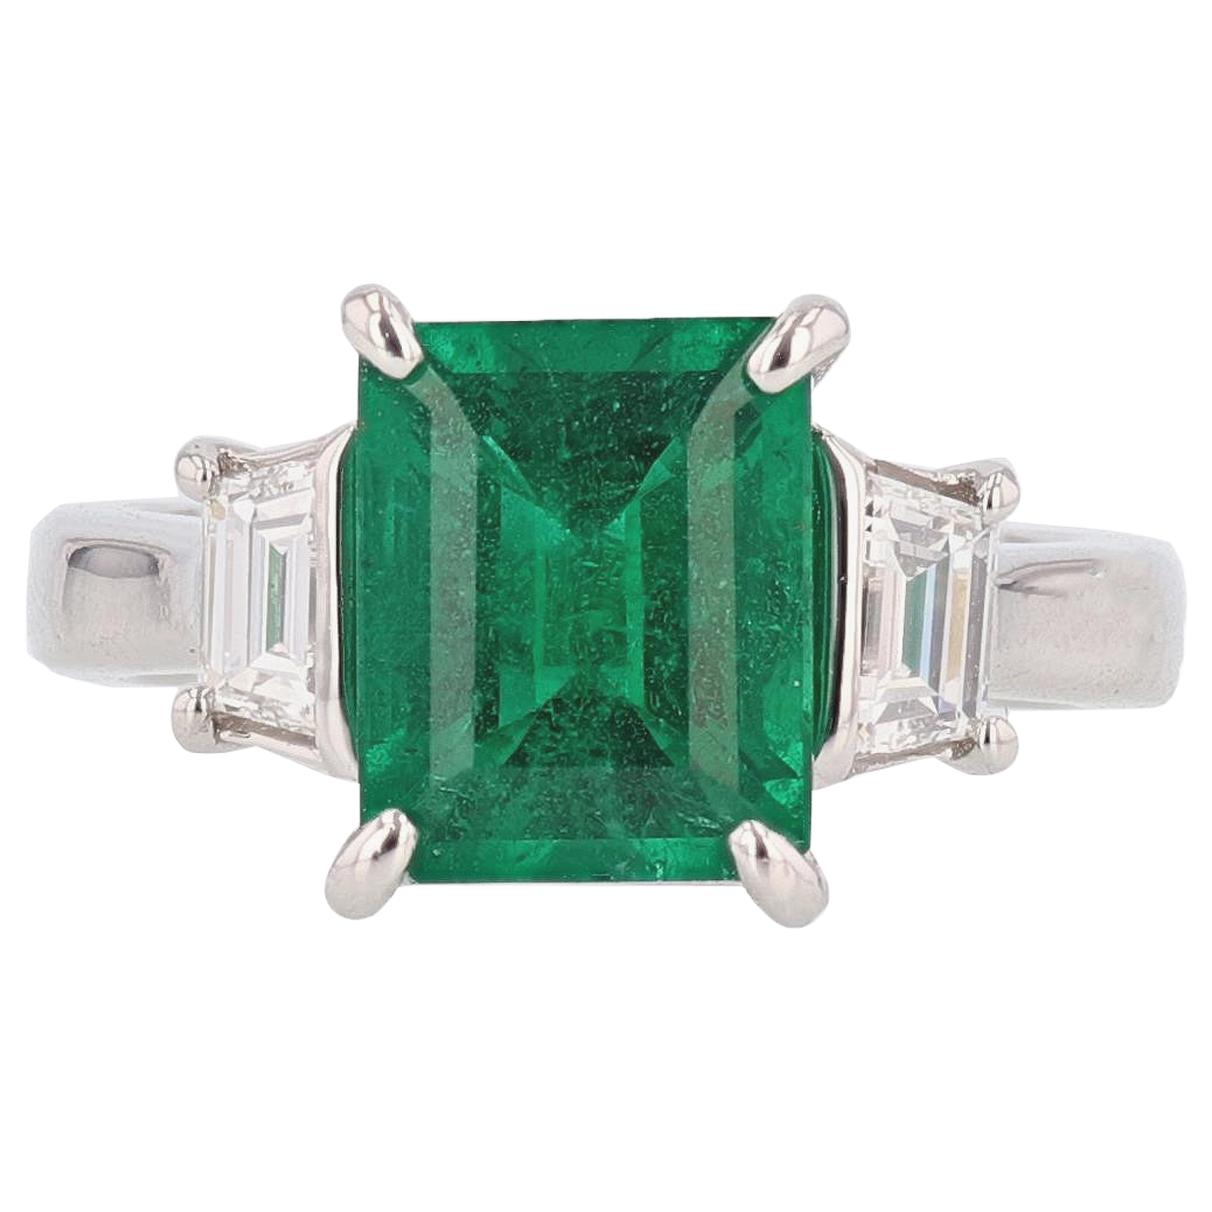 Nazarelle Platinum 3.10 Carat Colombian Emerald Cut Emerald Diamond Ring